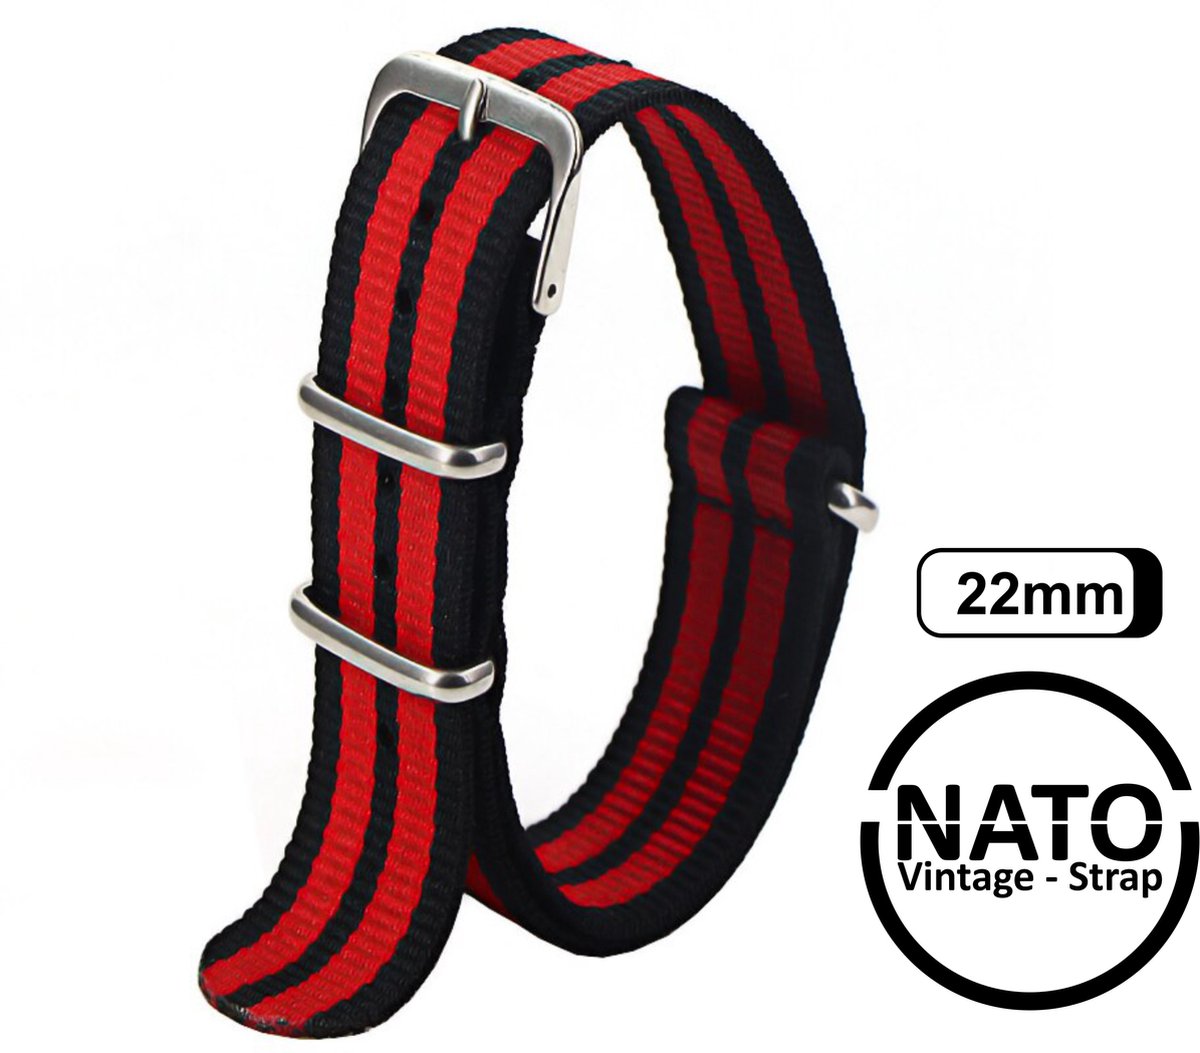 22mm Nato Strap Zwart Rood Gestreept - Vintage James Bond - Nato Strap collectie - Mannen - Horlogebanden - 22 mm bandbreedte voor oa. Seiko Rolex Omega Casio en Citizen